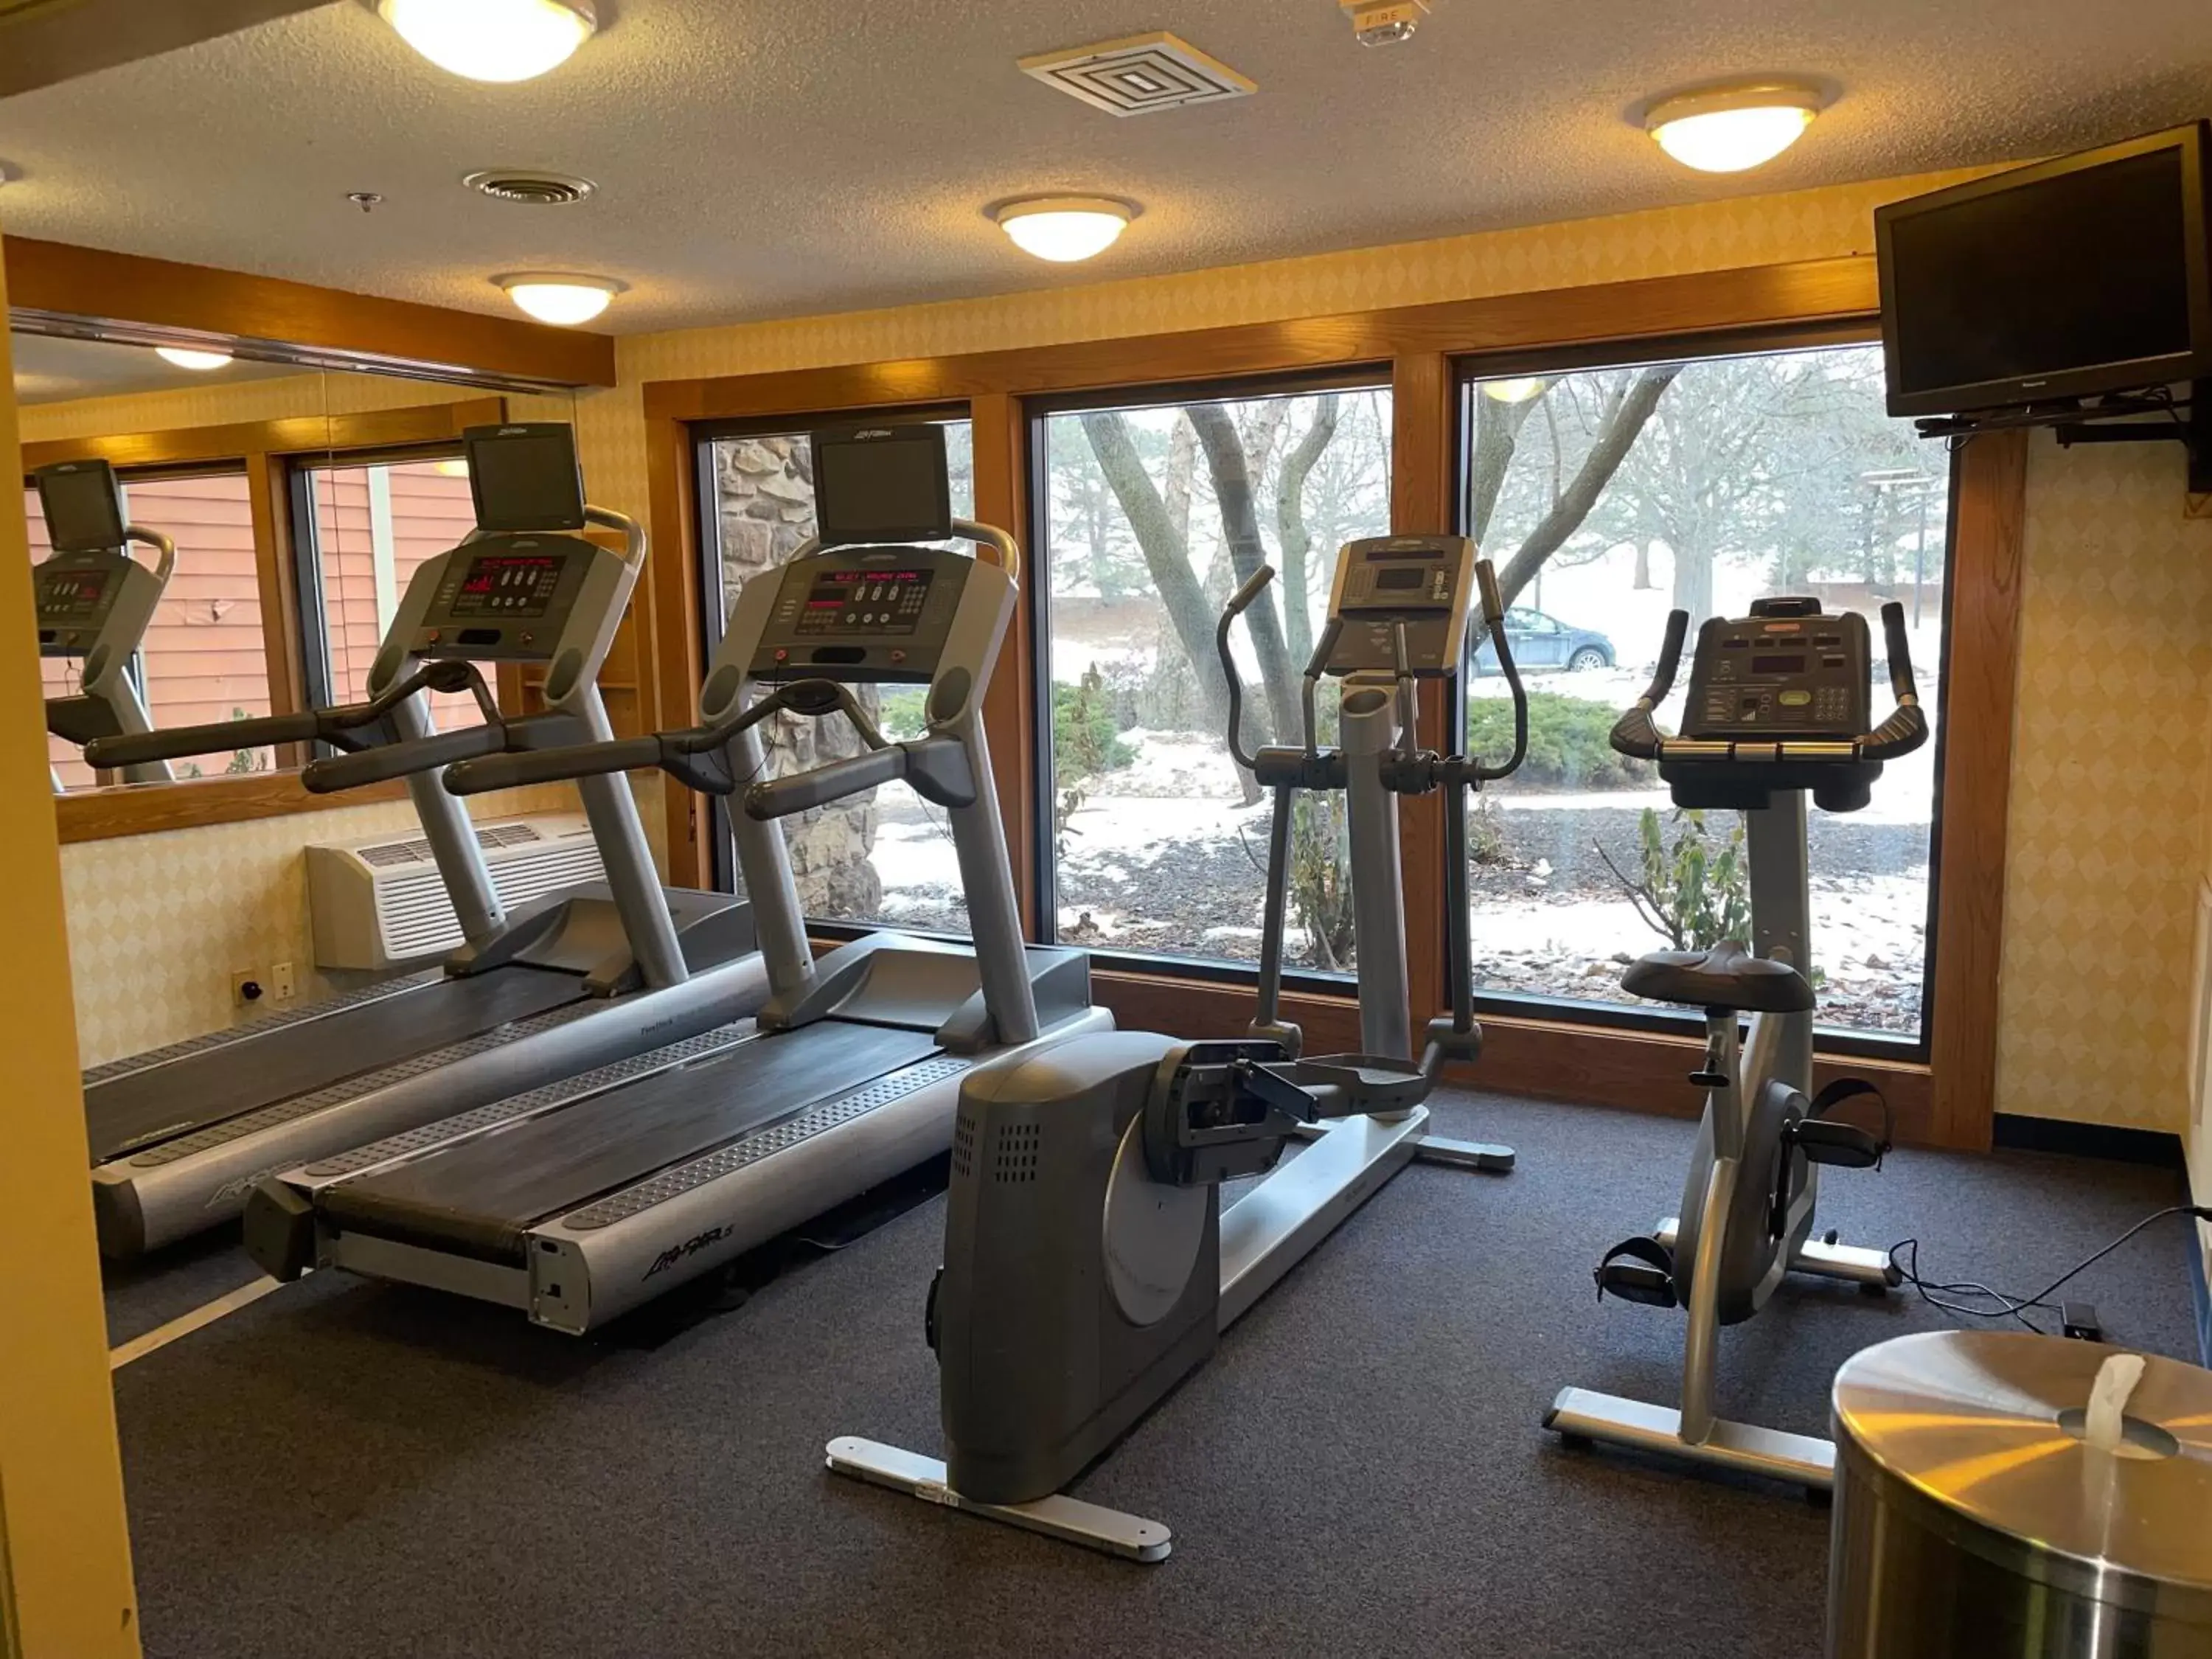 Fitness centre/facilities, Fitness Center/Facilities in Clarion Inn Merrillville